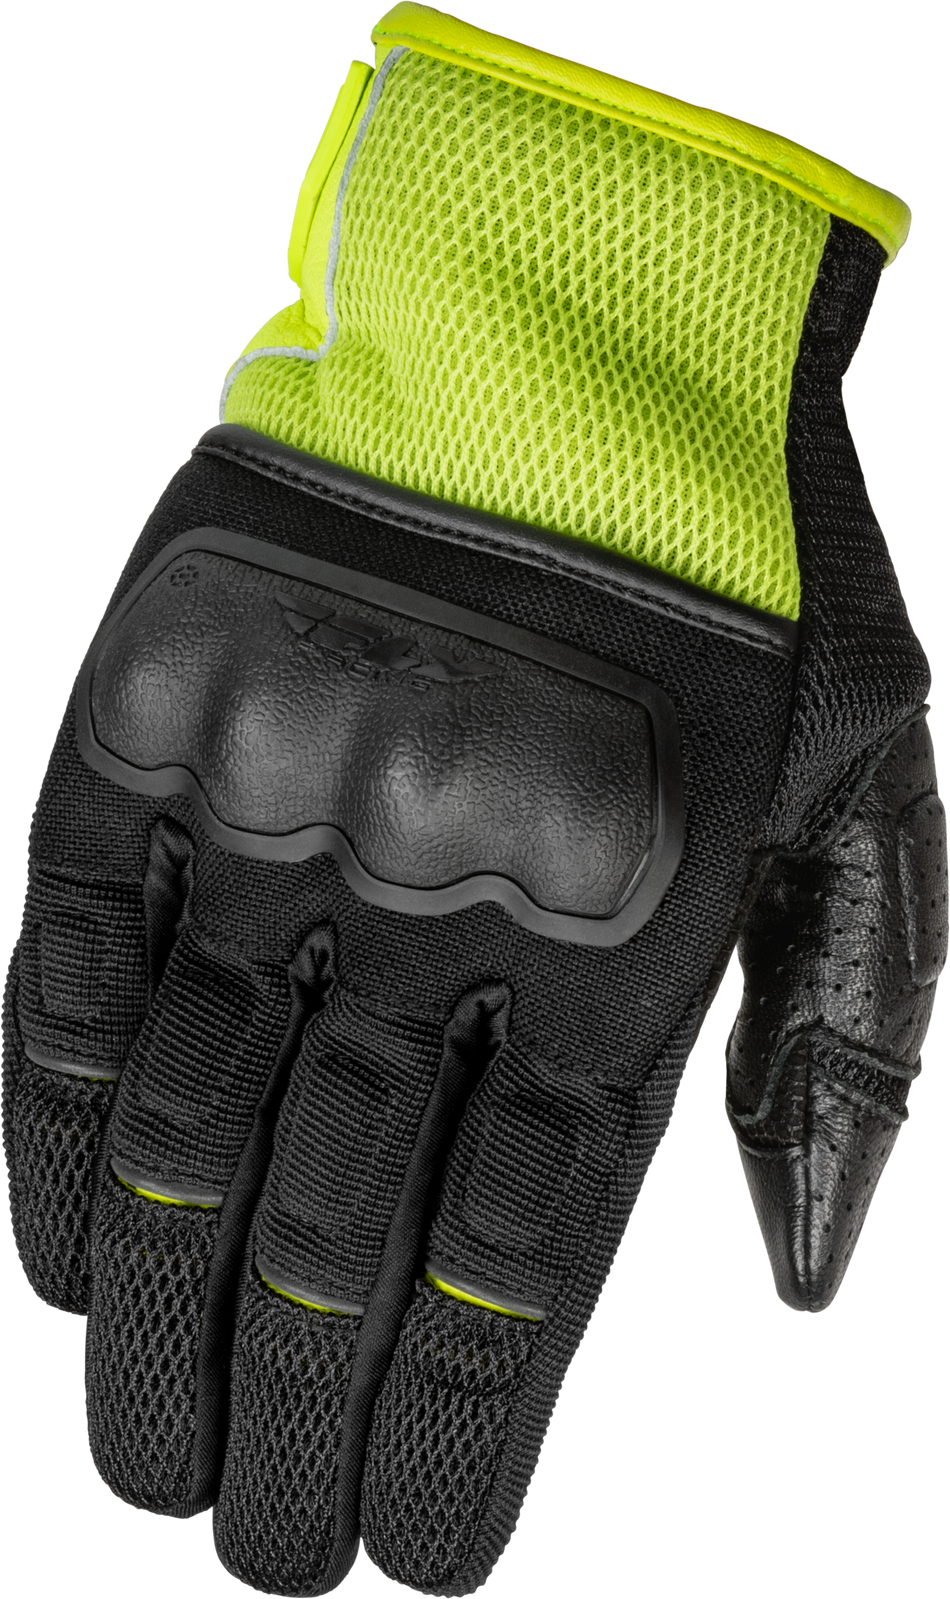 FLY RACING Coolpro Force Gloves Black/Hi-Vis Sm 476-4128S